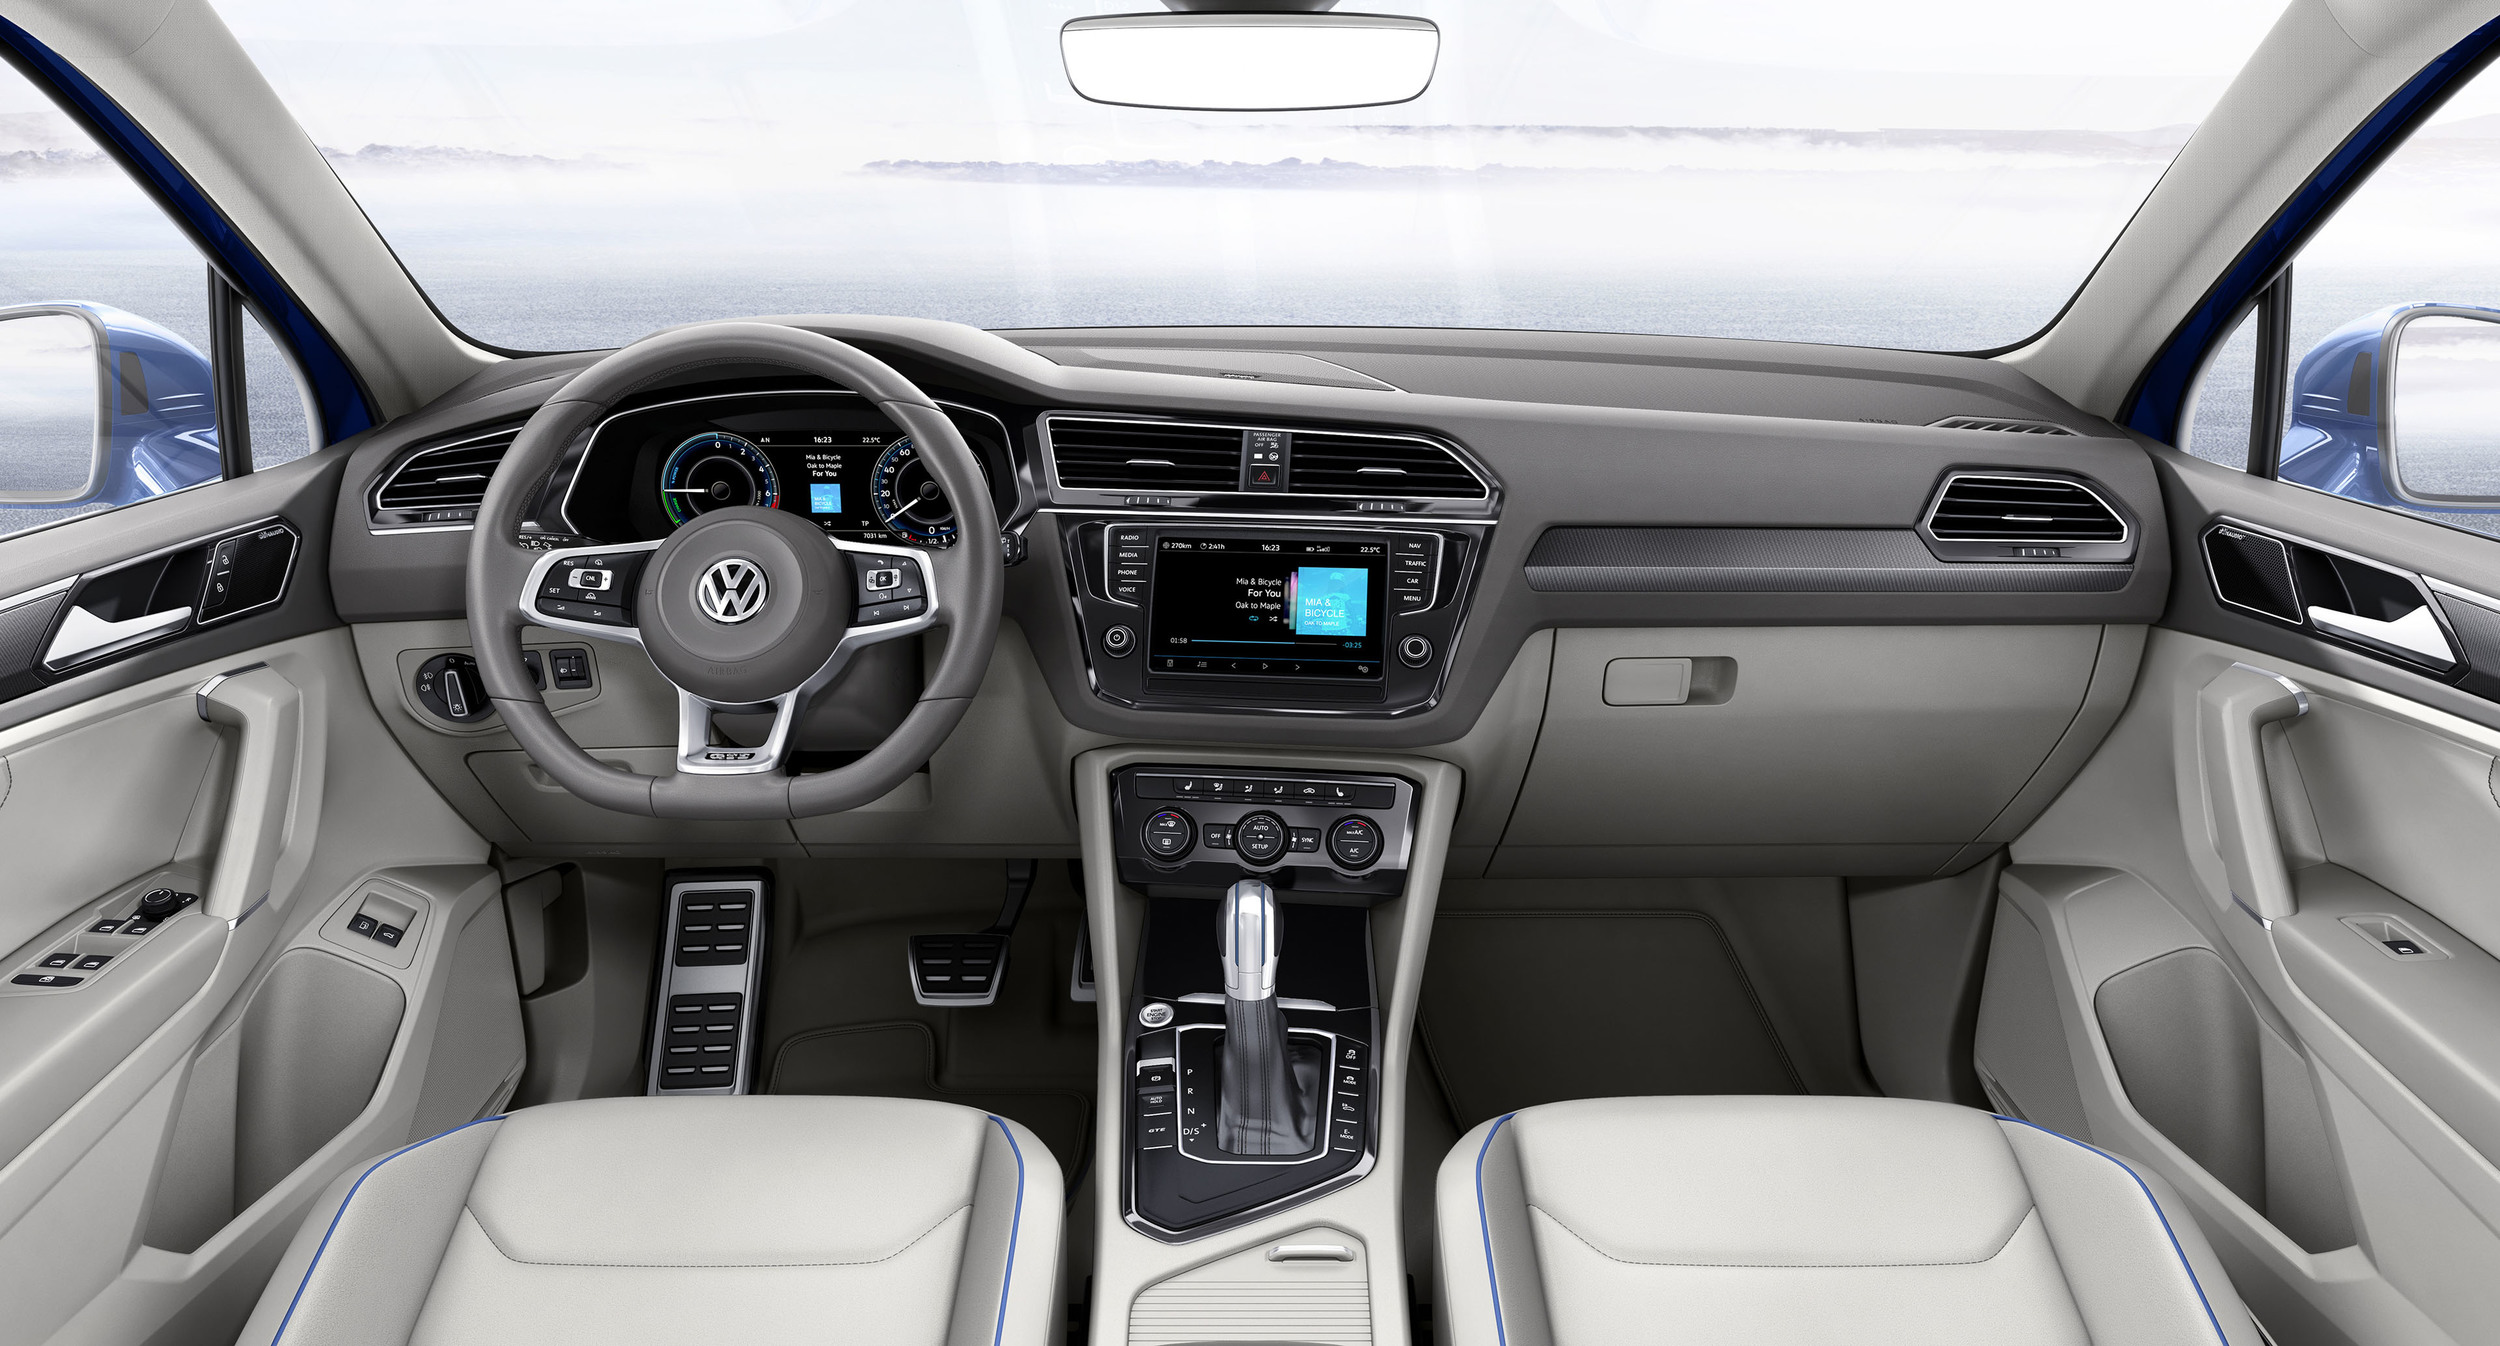 Volkswagen Tiguan GTE Concept, 2015 - Interior